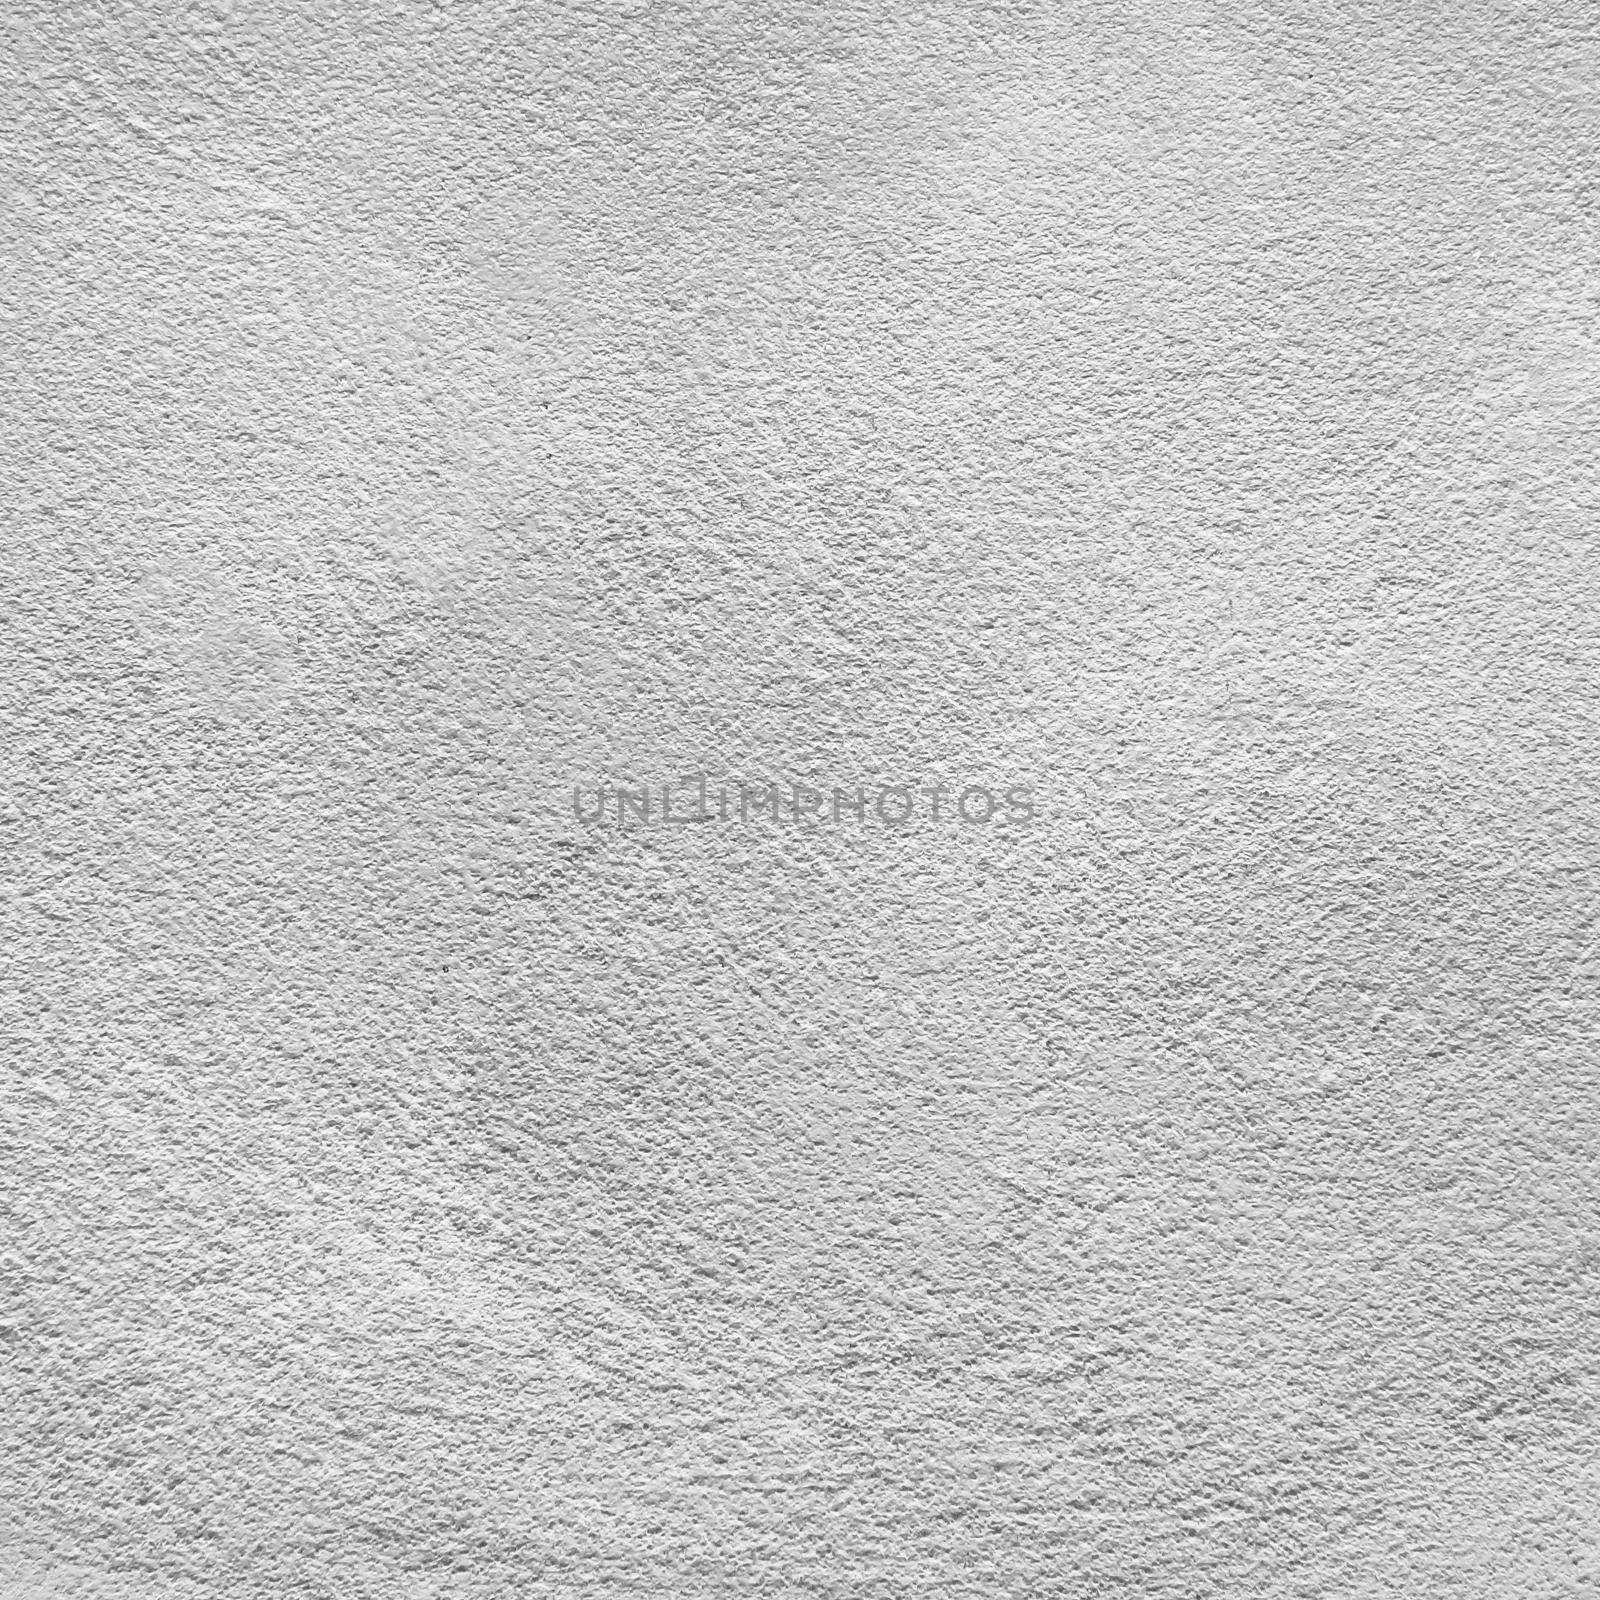 White concrete wall by germanopoli